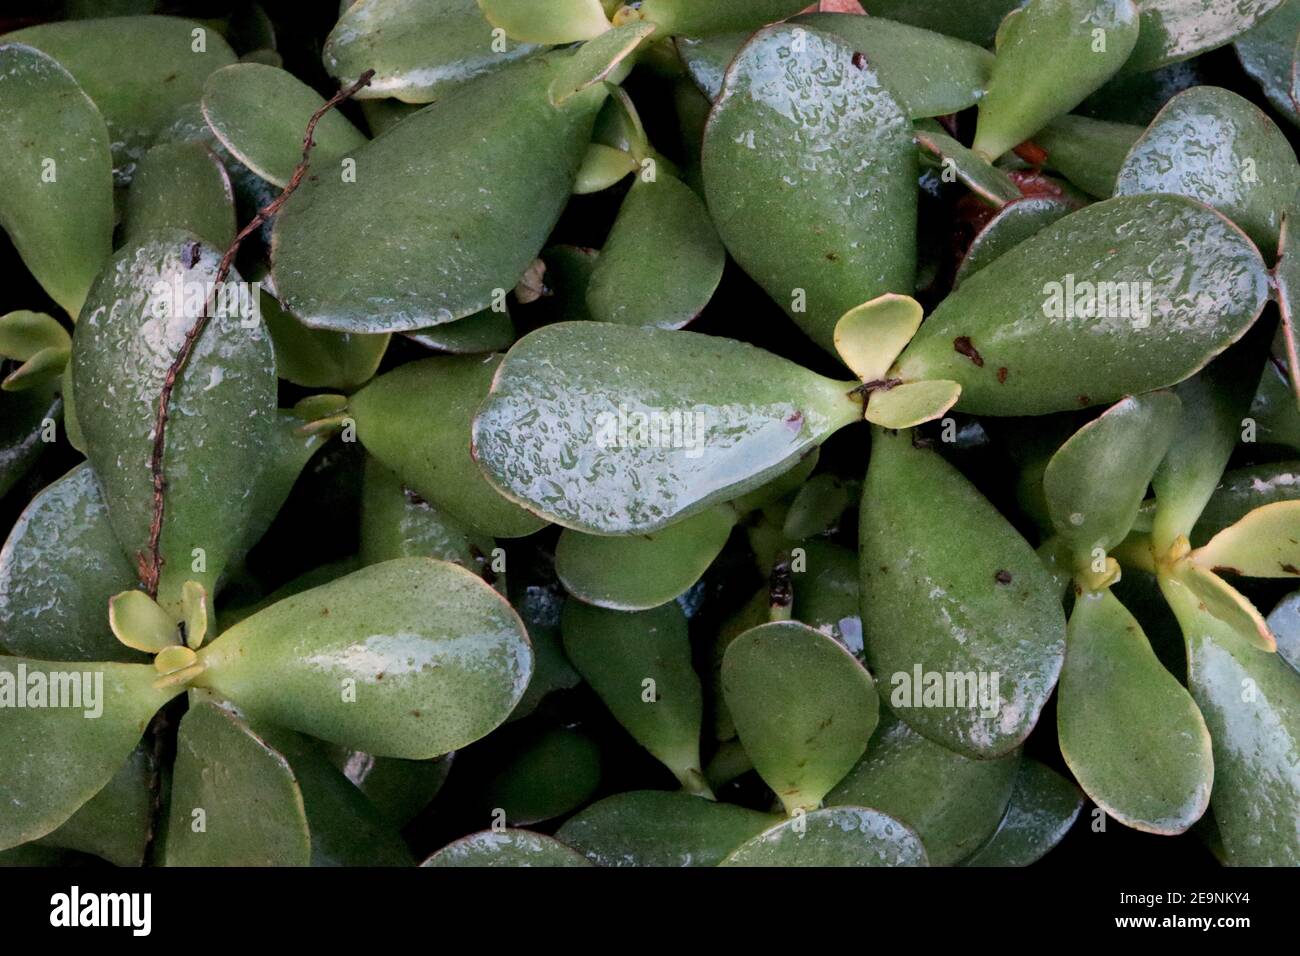 Crassula ovata Jade plant – thick fleshy jade green spoon-shaped leaves,  February, England, UK Stock Photo